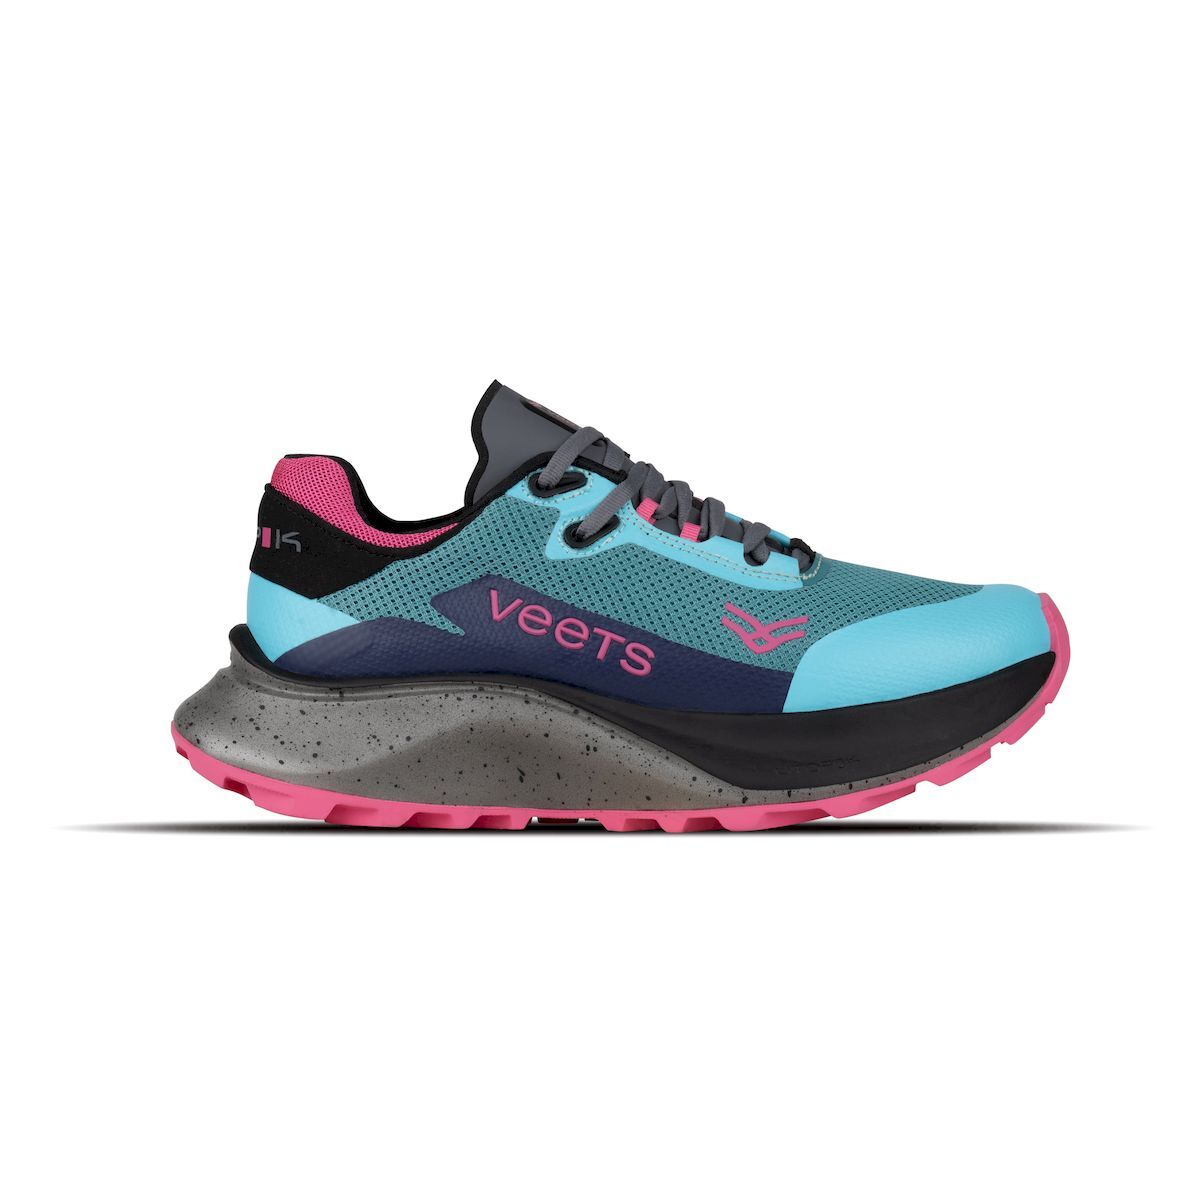 Veets Utopik XTerra MIF1 - Trail running shoes - Women's